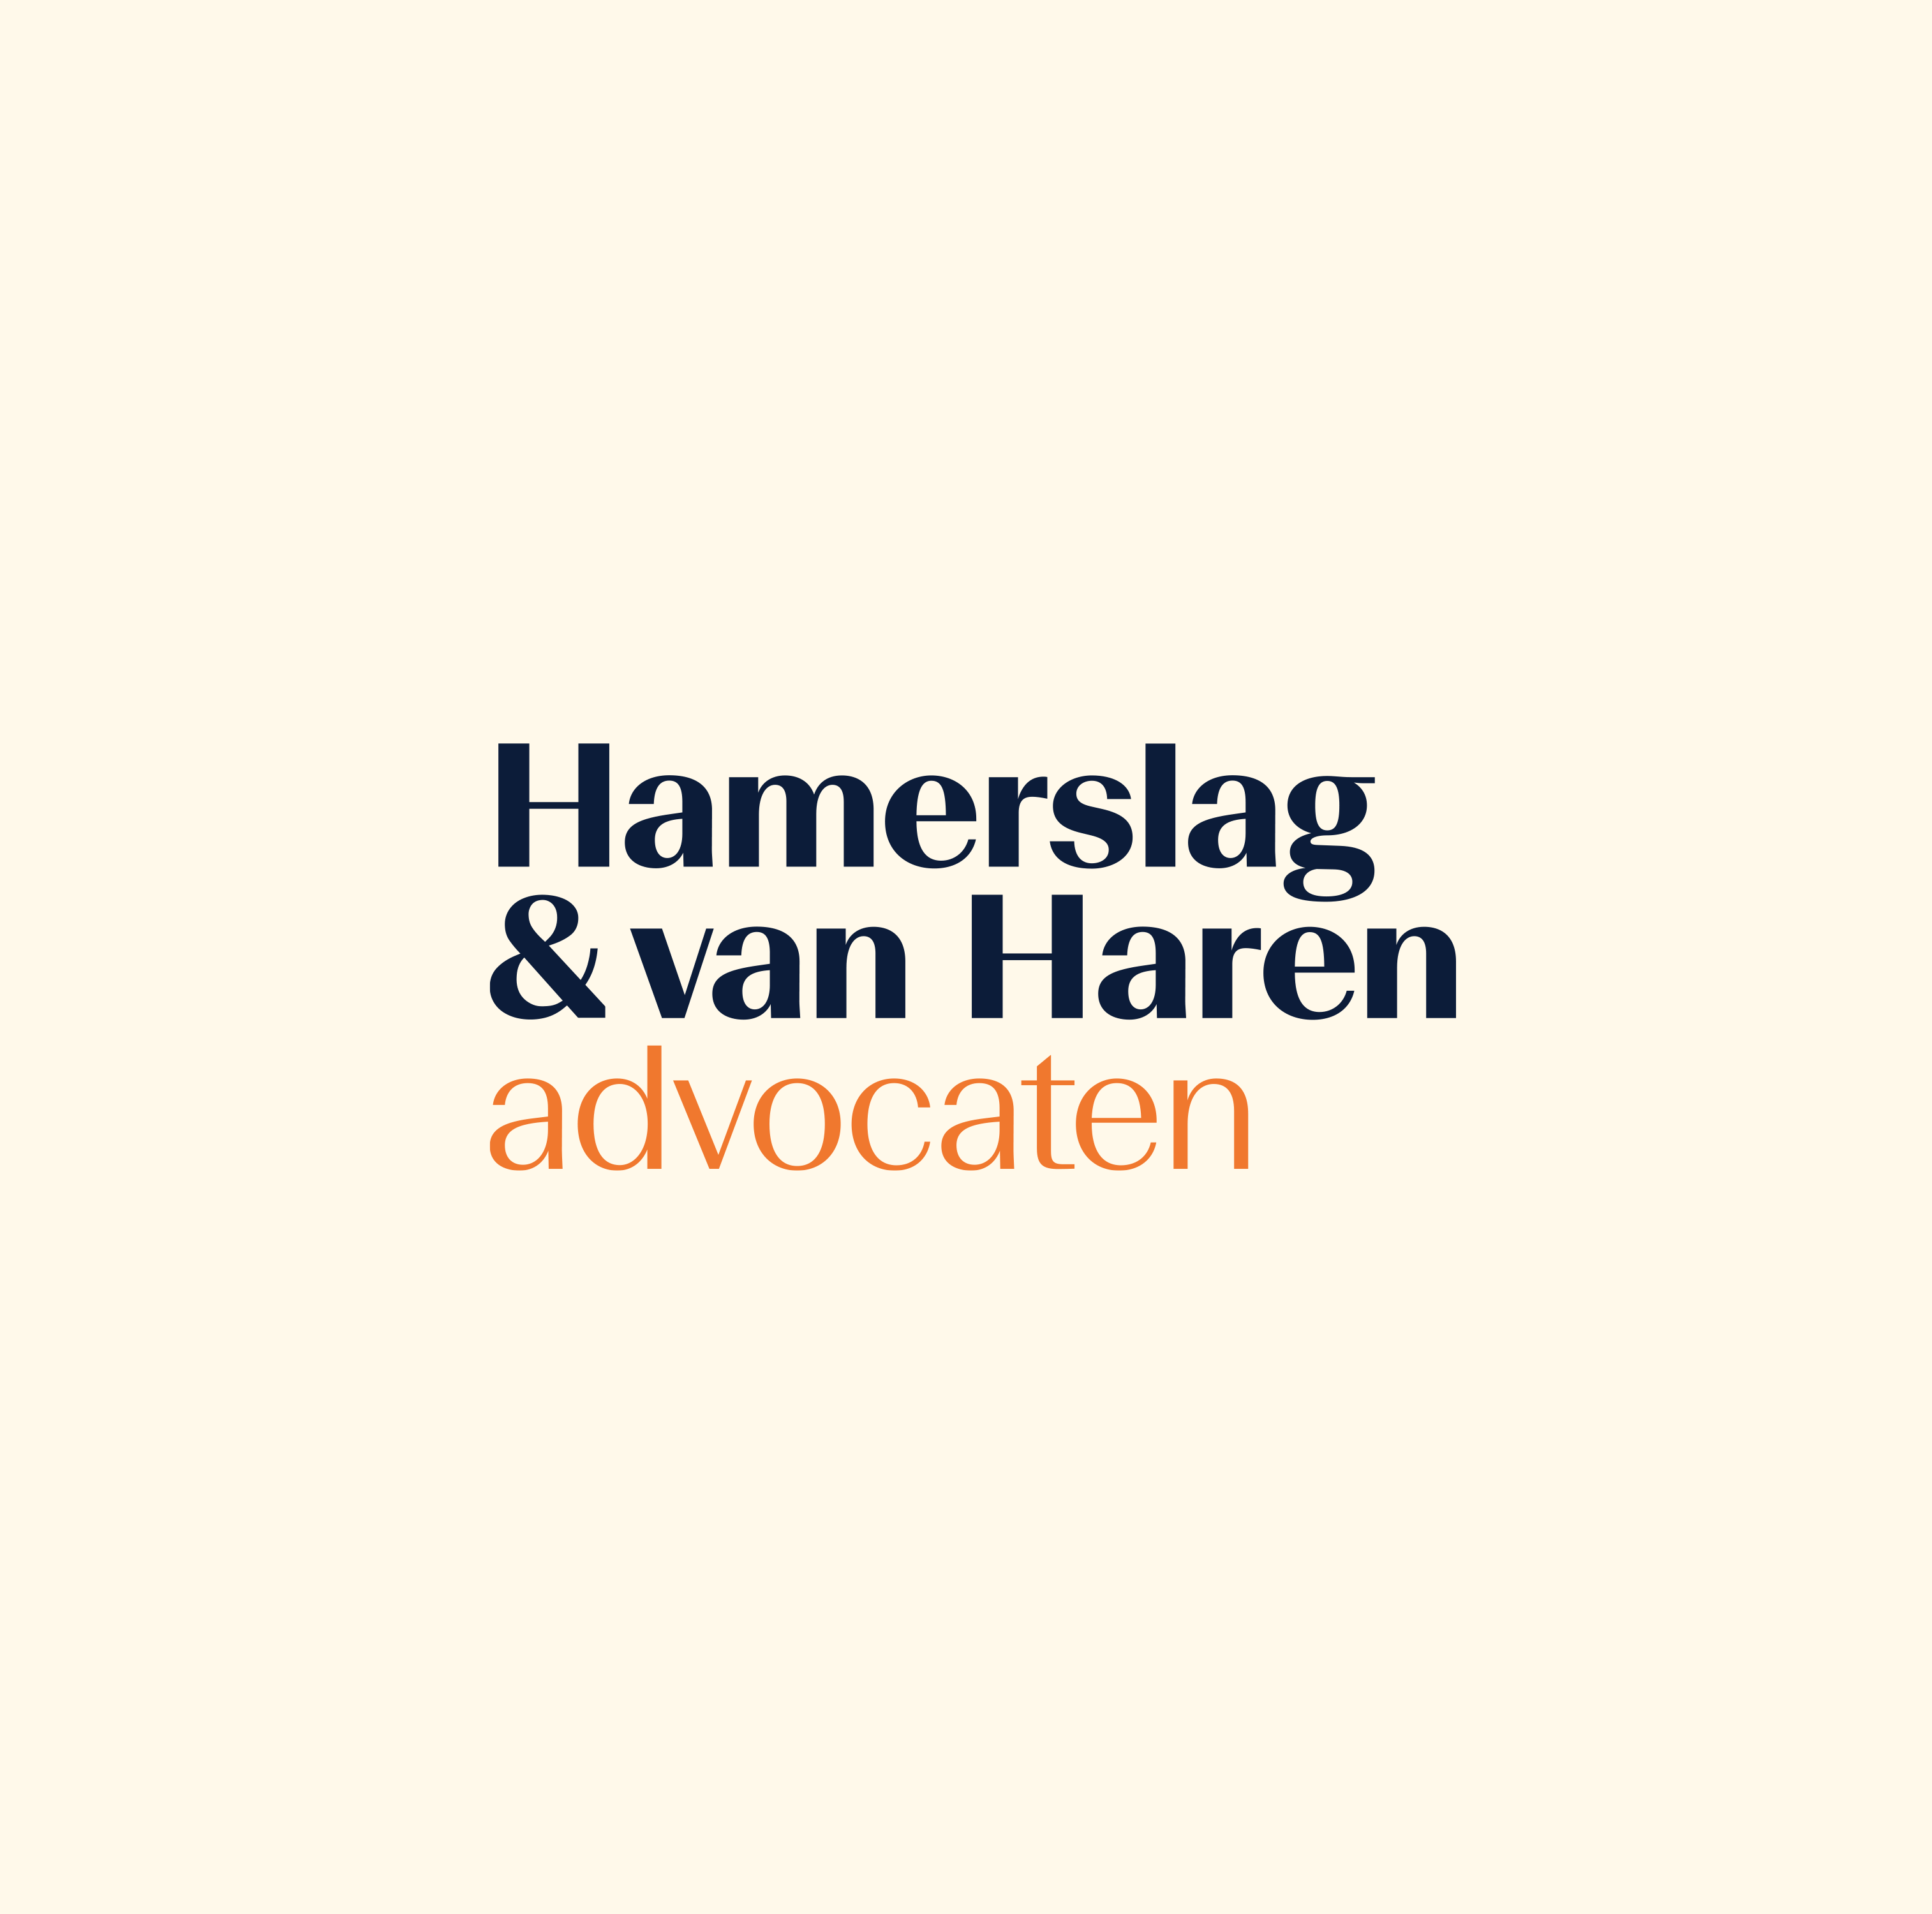 hamerslag_van_haren_logo